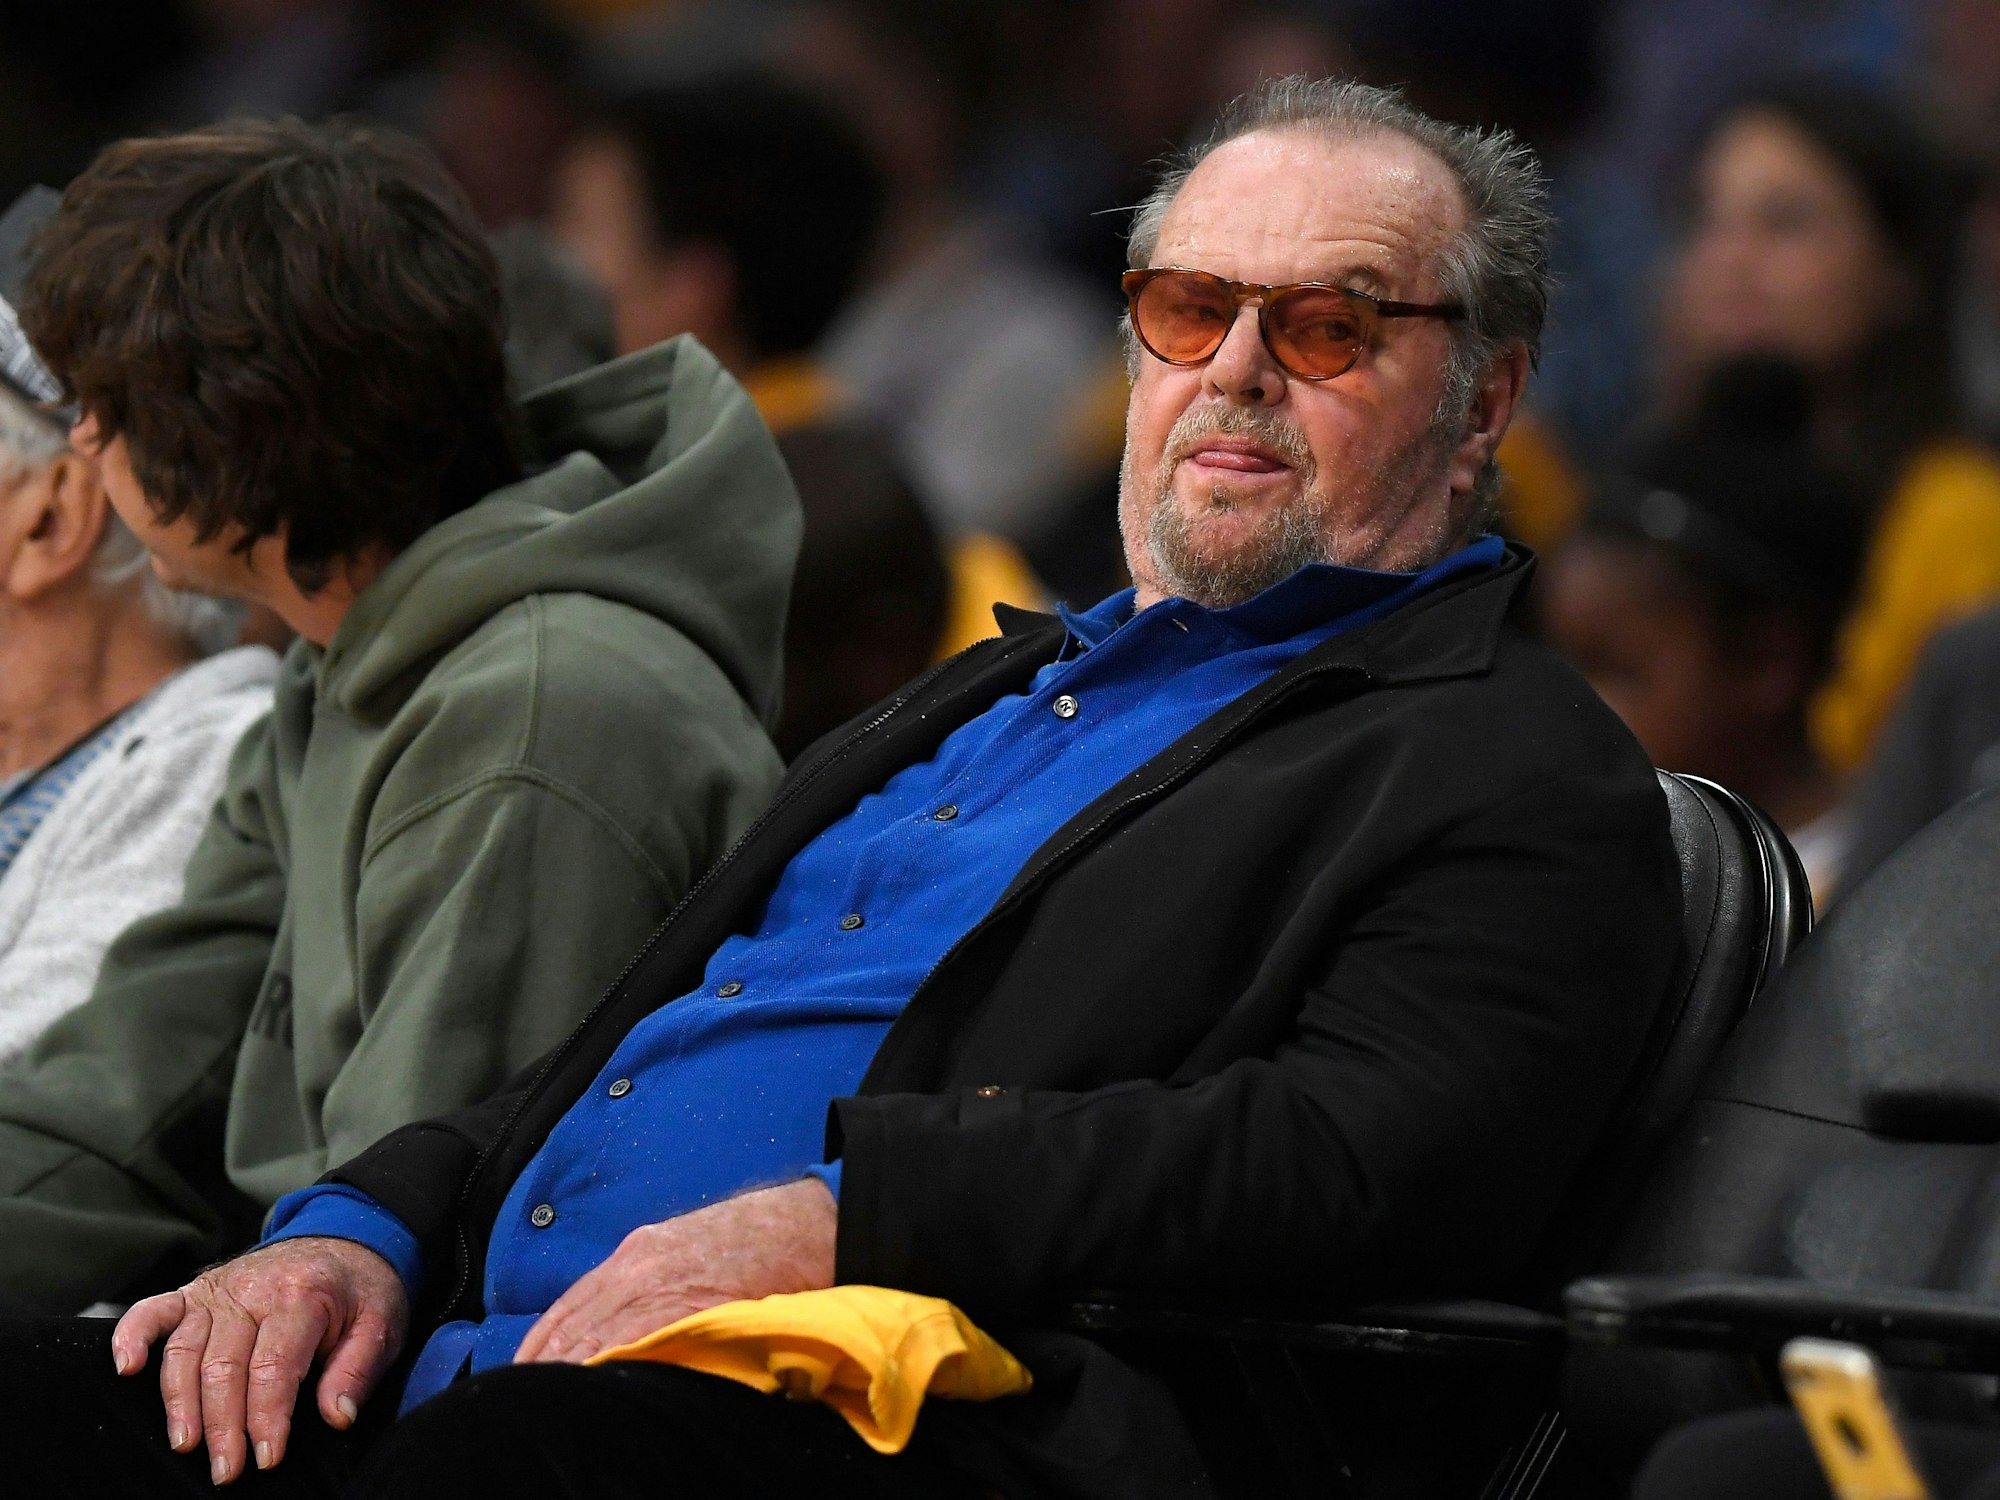 US-Schauspieler Jack Nicholson verfolgt am 19. Oktober 2017 inLos Angeles (USA) das NBA-Basketballspiel zwischen den Los Angeles Lakers und den Los Angeles Clippers.